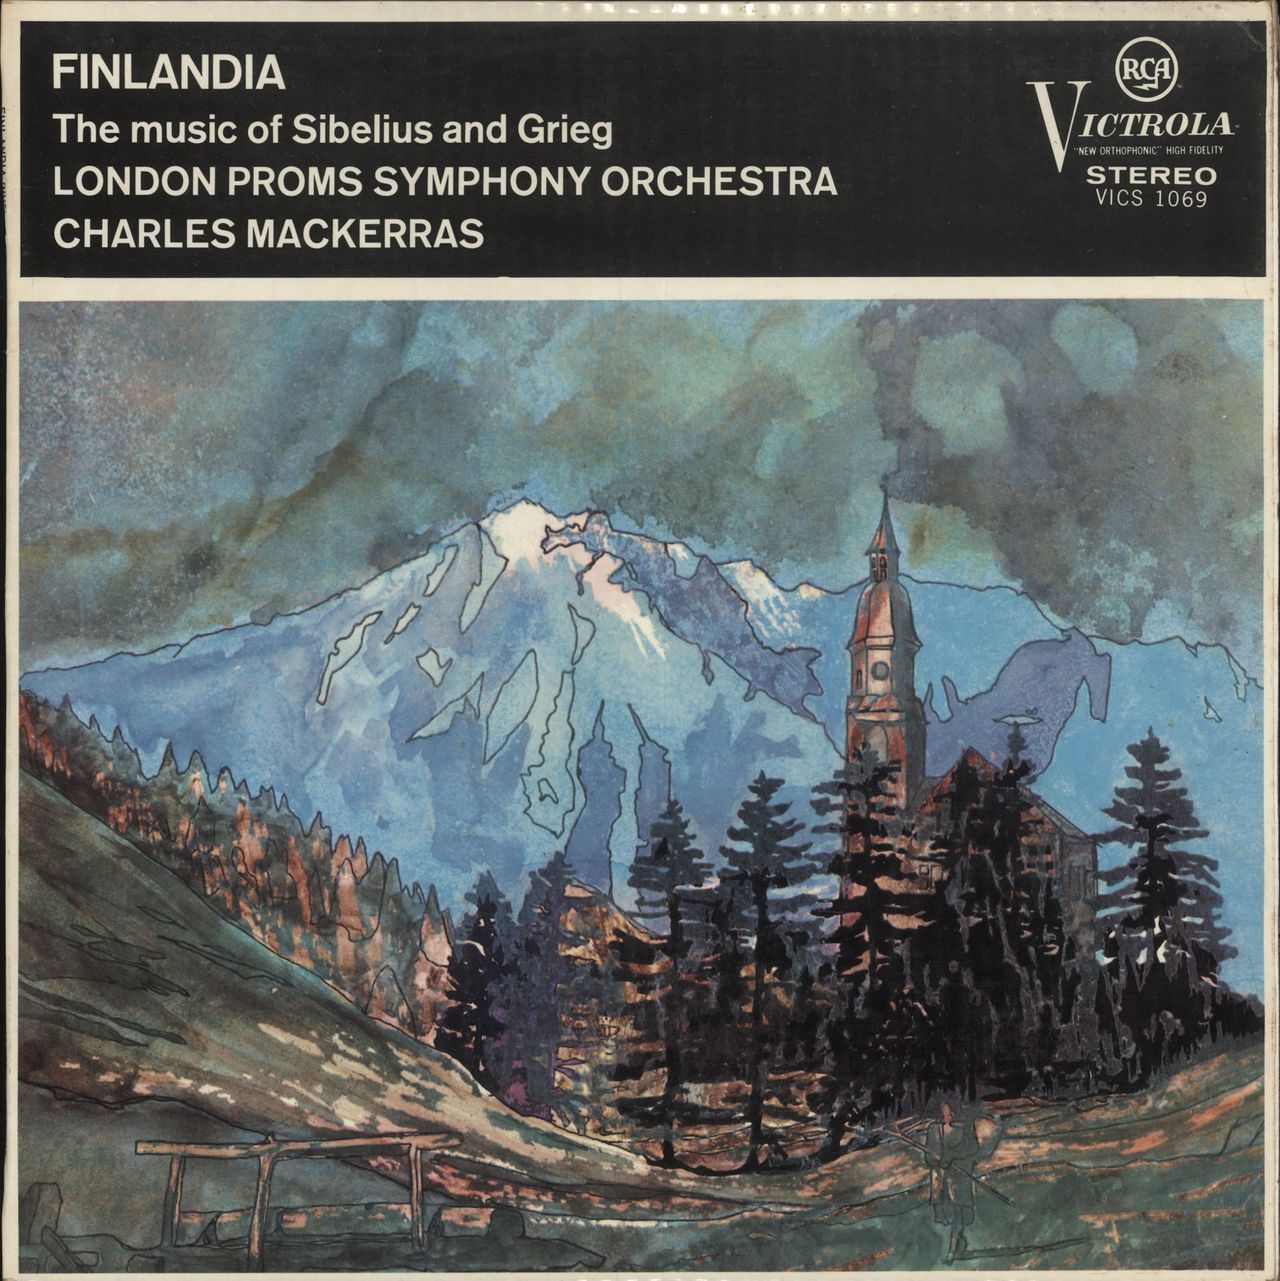 The London Proms Symphony Orchestra Finlandia: The Music Of Sibelius and Grieg UK vinyl LP album (LP record) VICS1069